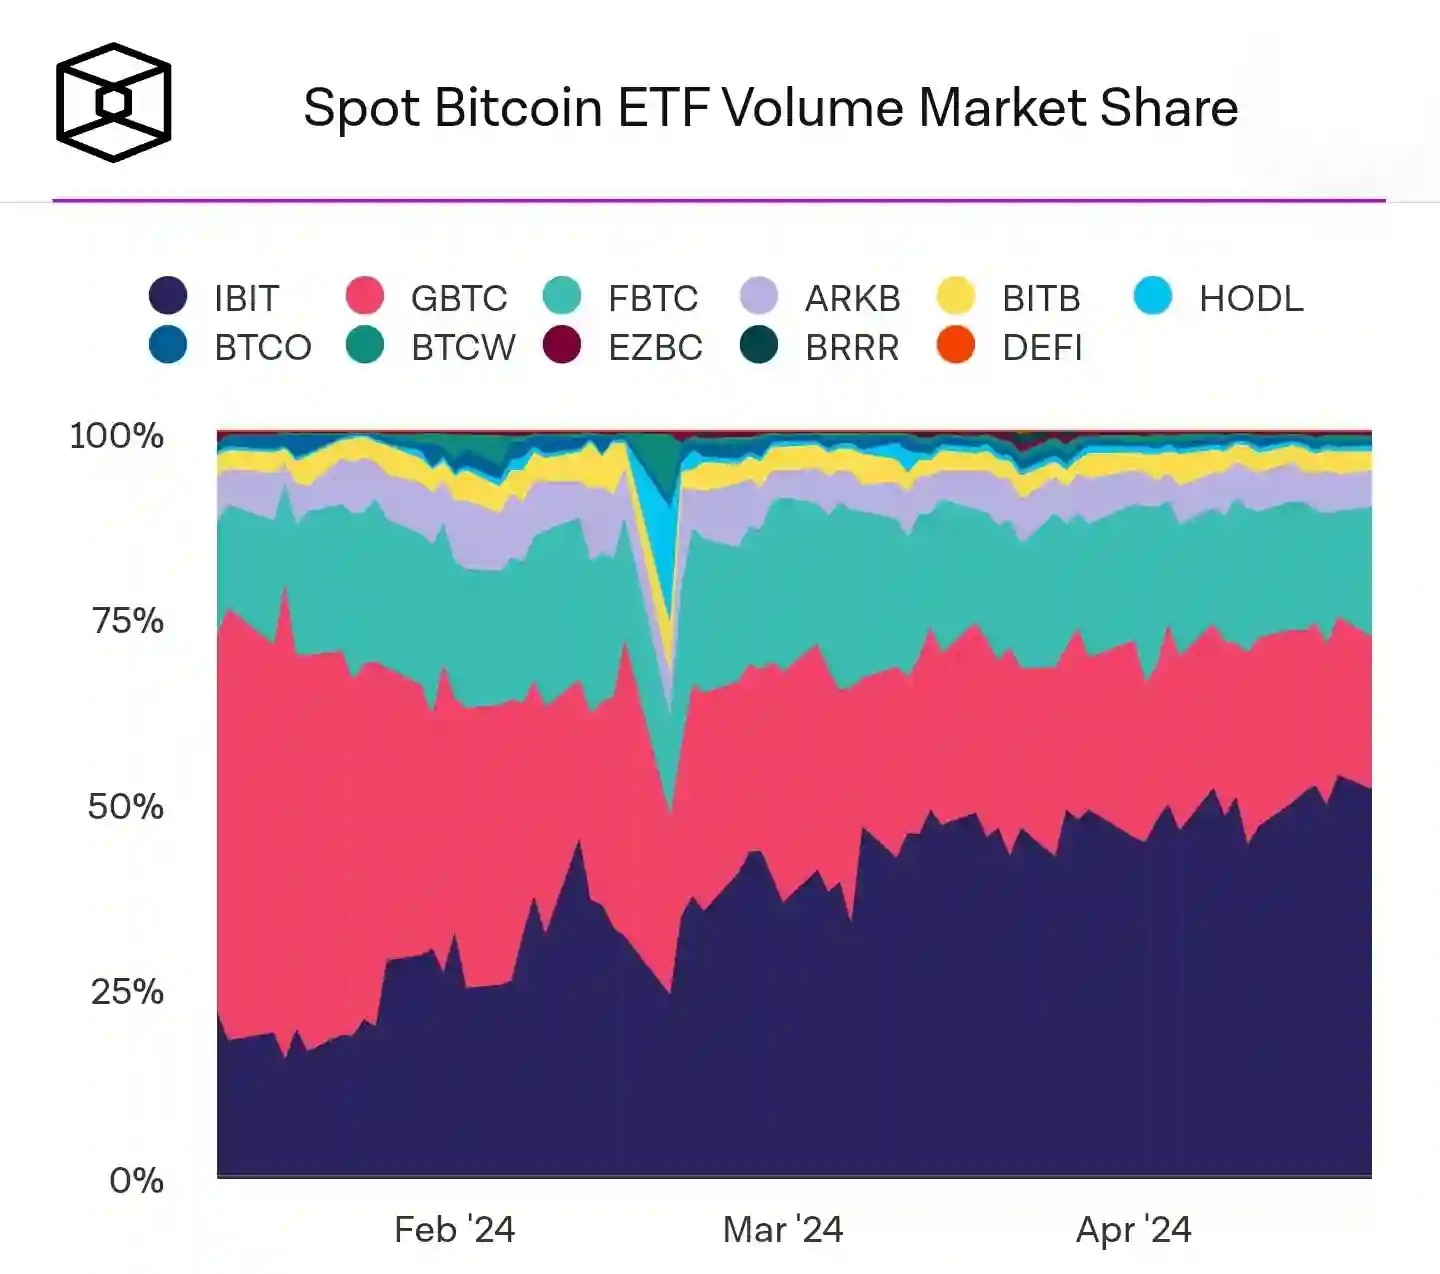 Image showing Bitcoin ETF volume market share